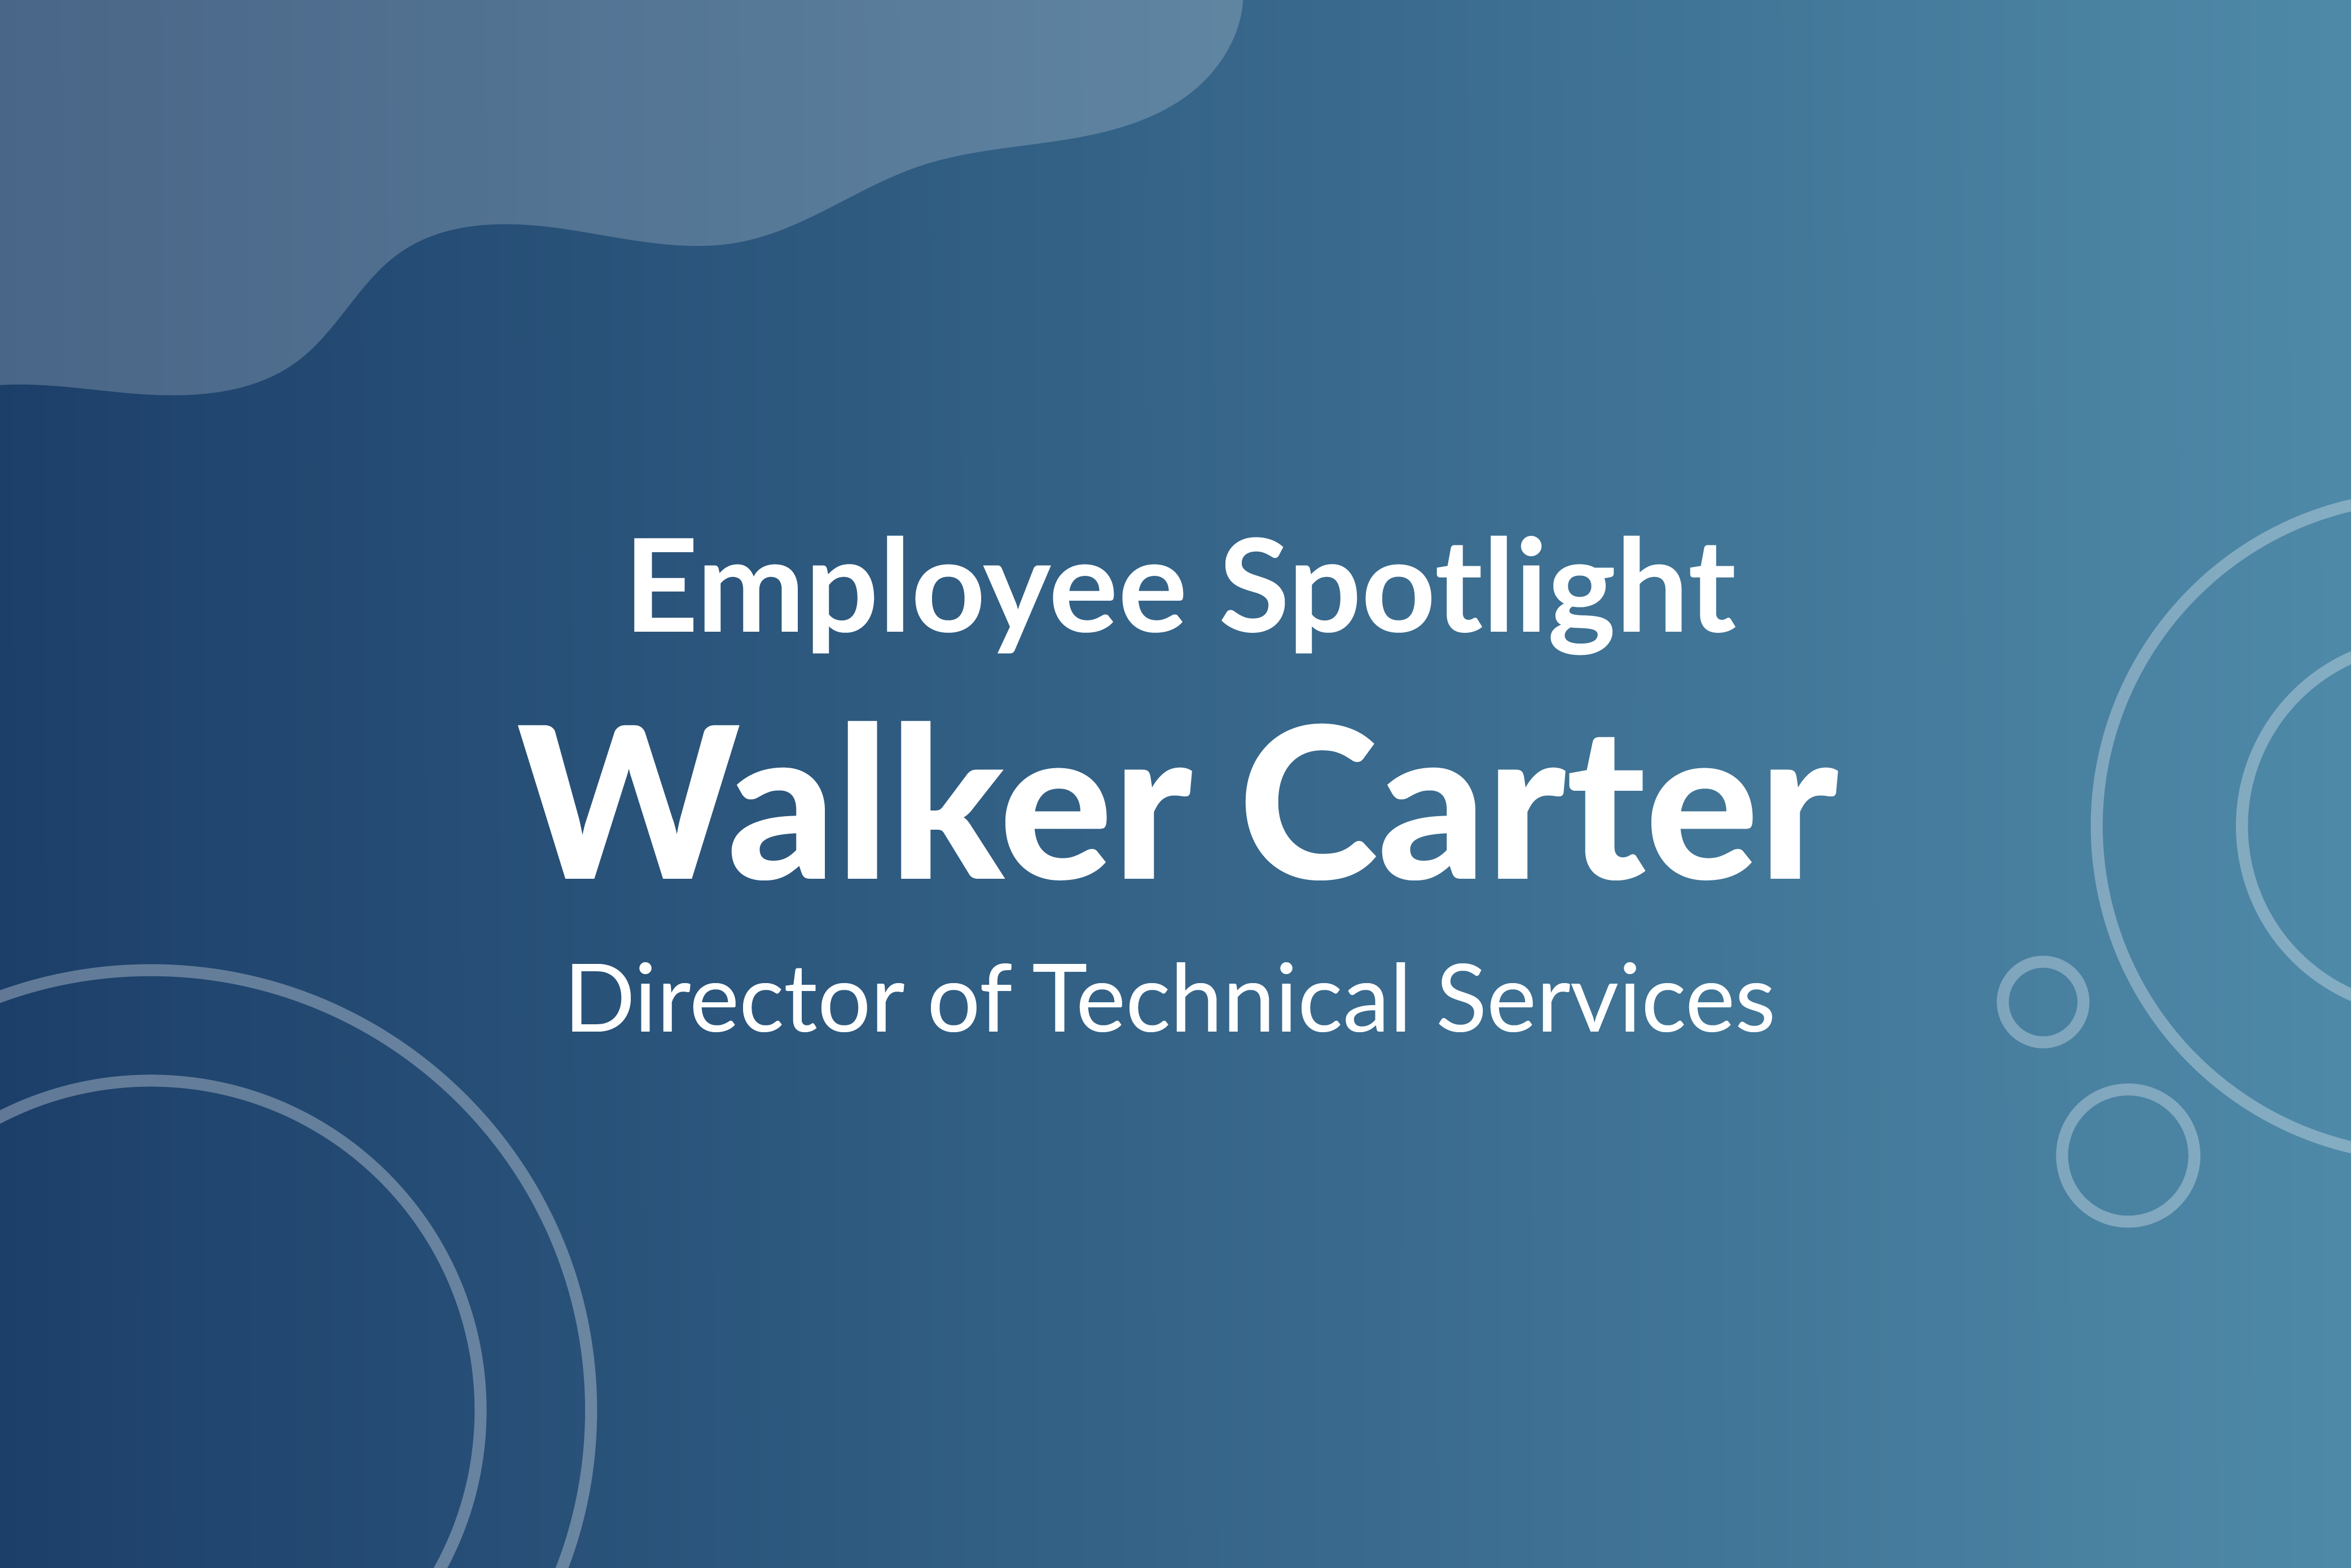 Employee Spotlight: Get To Know Walker